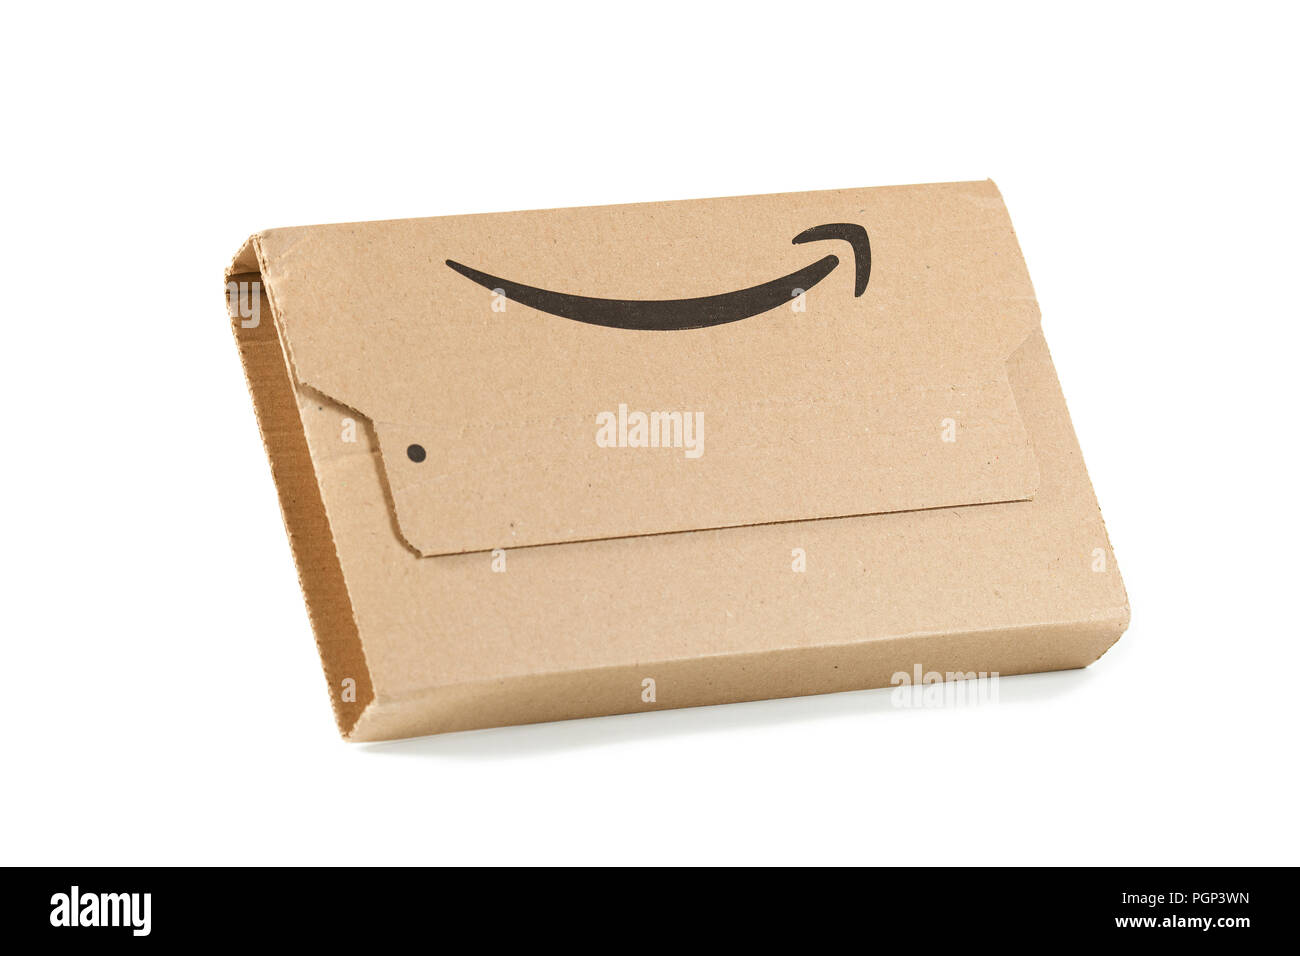 Amazon parcel with logo on white background Stock Photo